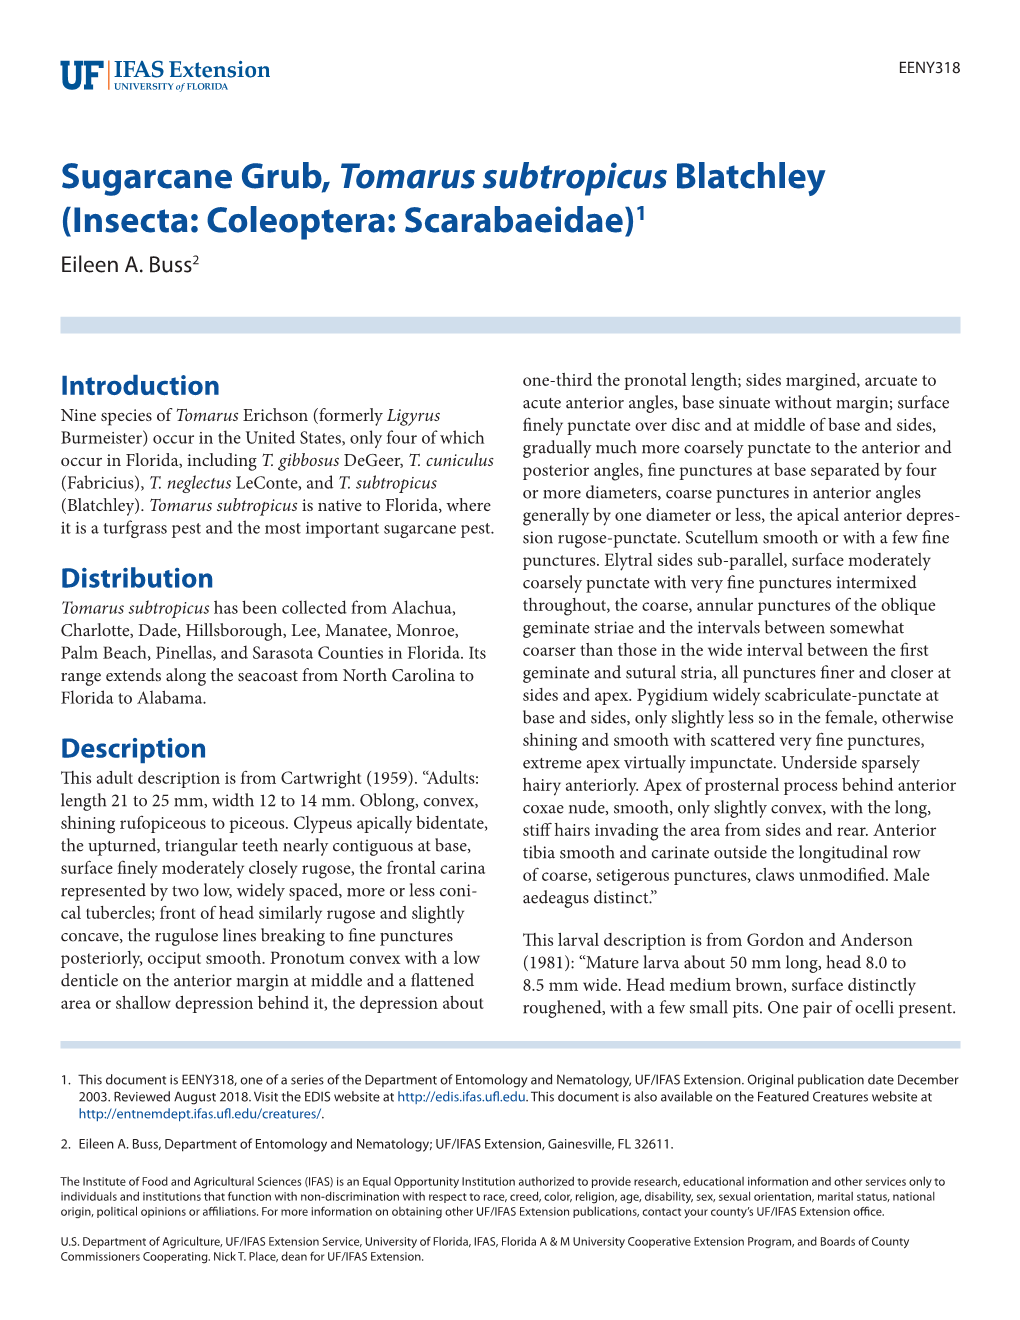 Sugarcane Grub, Tomarus Subtropicus Blatchley (Insecta: Coleoptera: Scarabaeidae)1 Eileen A